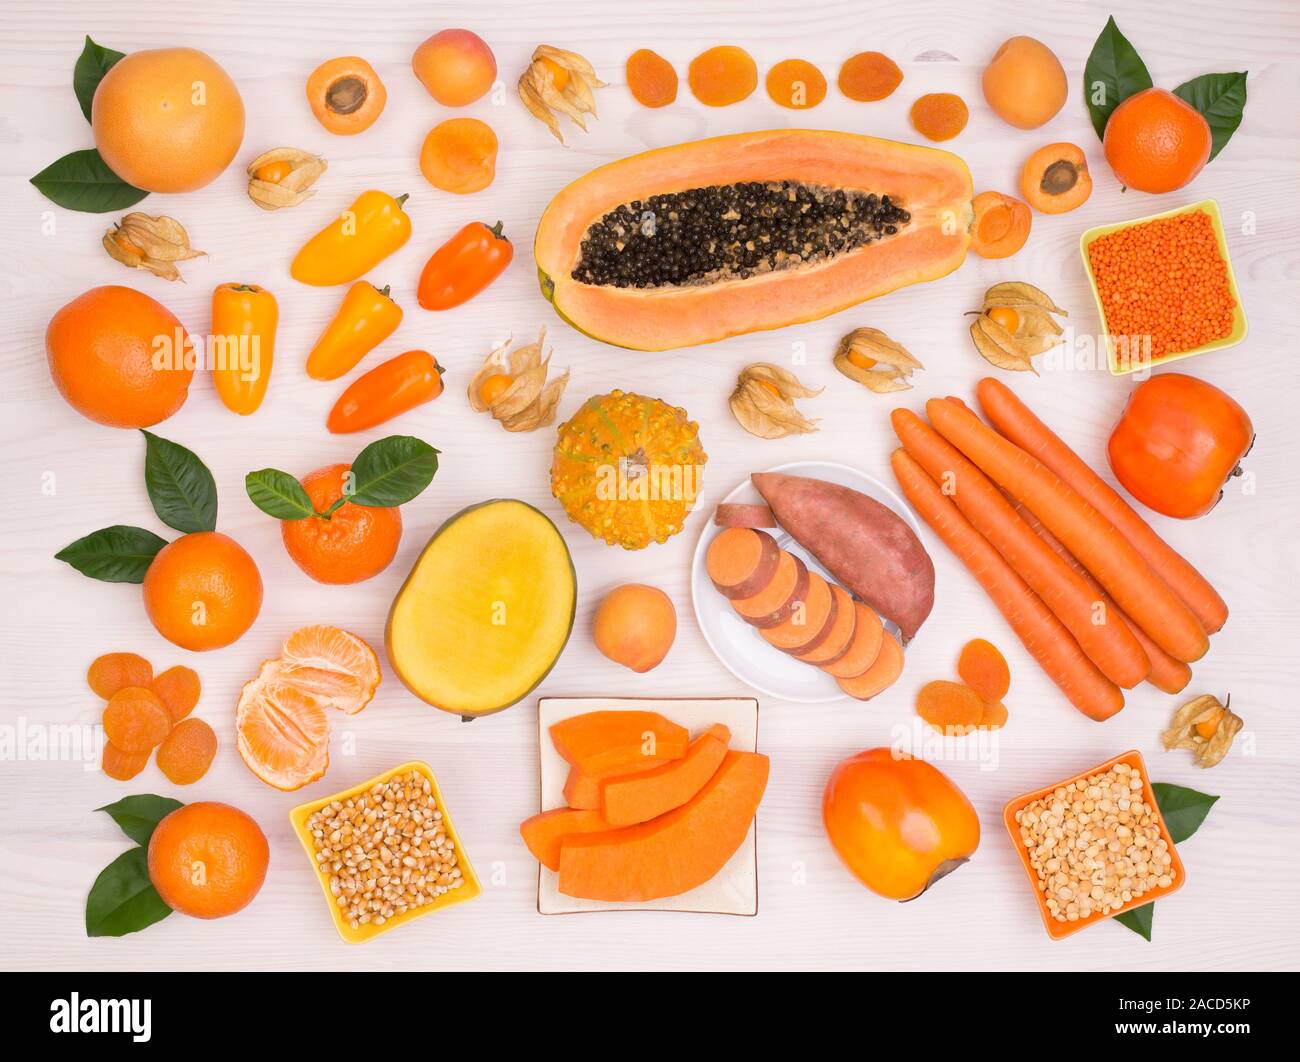 Orange fruit and vegetables containing plenty of beta carotene Stock Photo